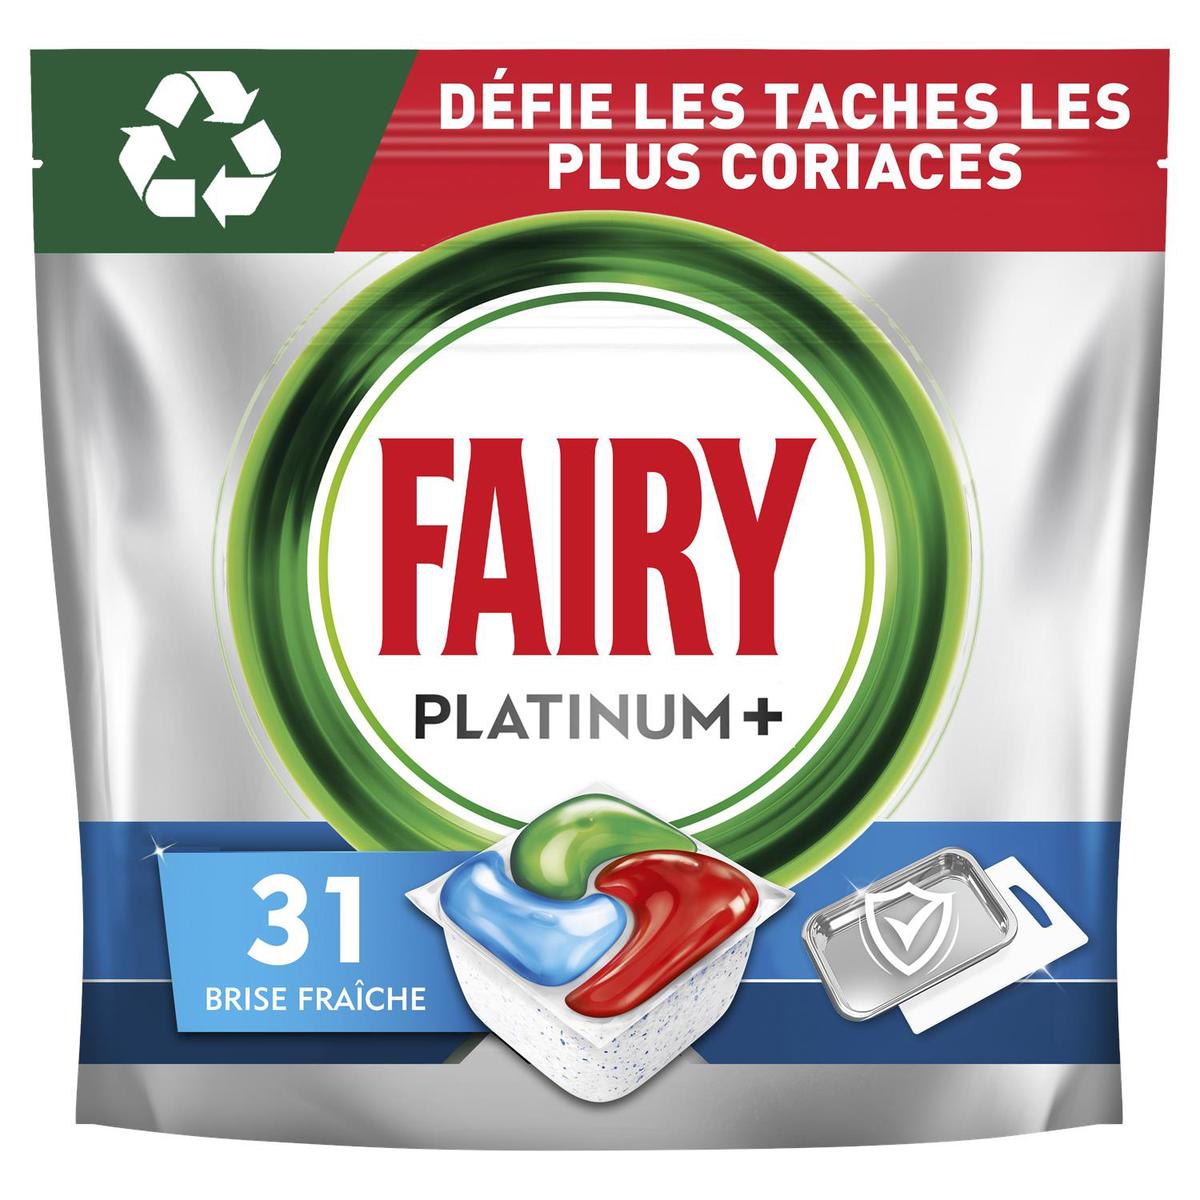 FAIRY Fairy original tablettes lave-vaisselle all in one regular, 33  capsules 